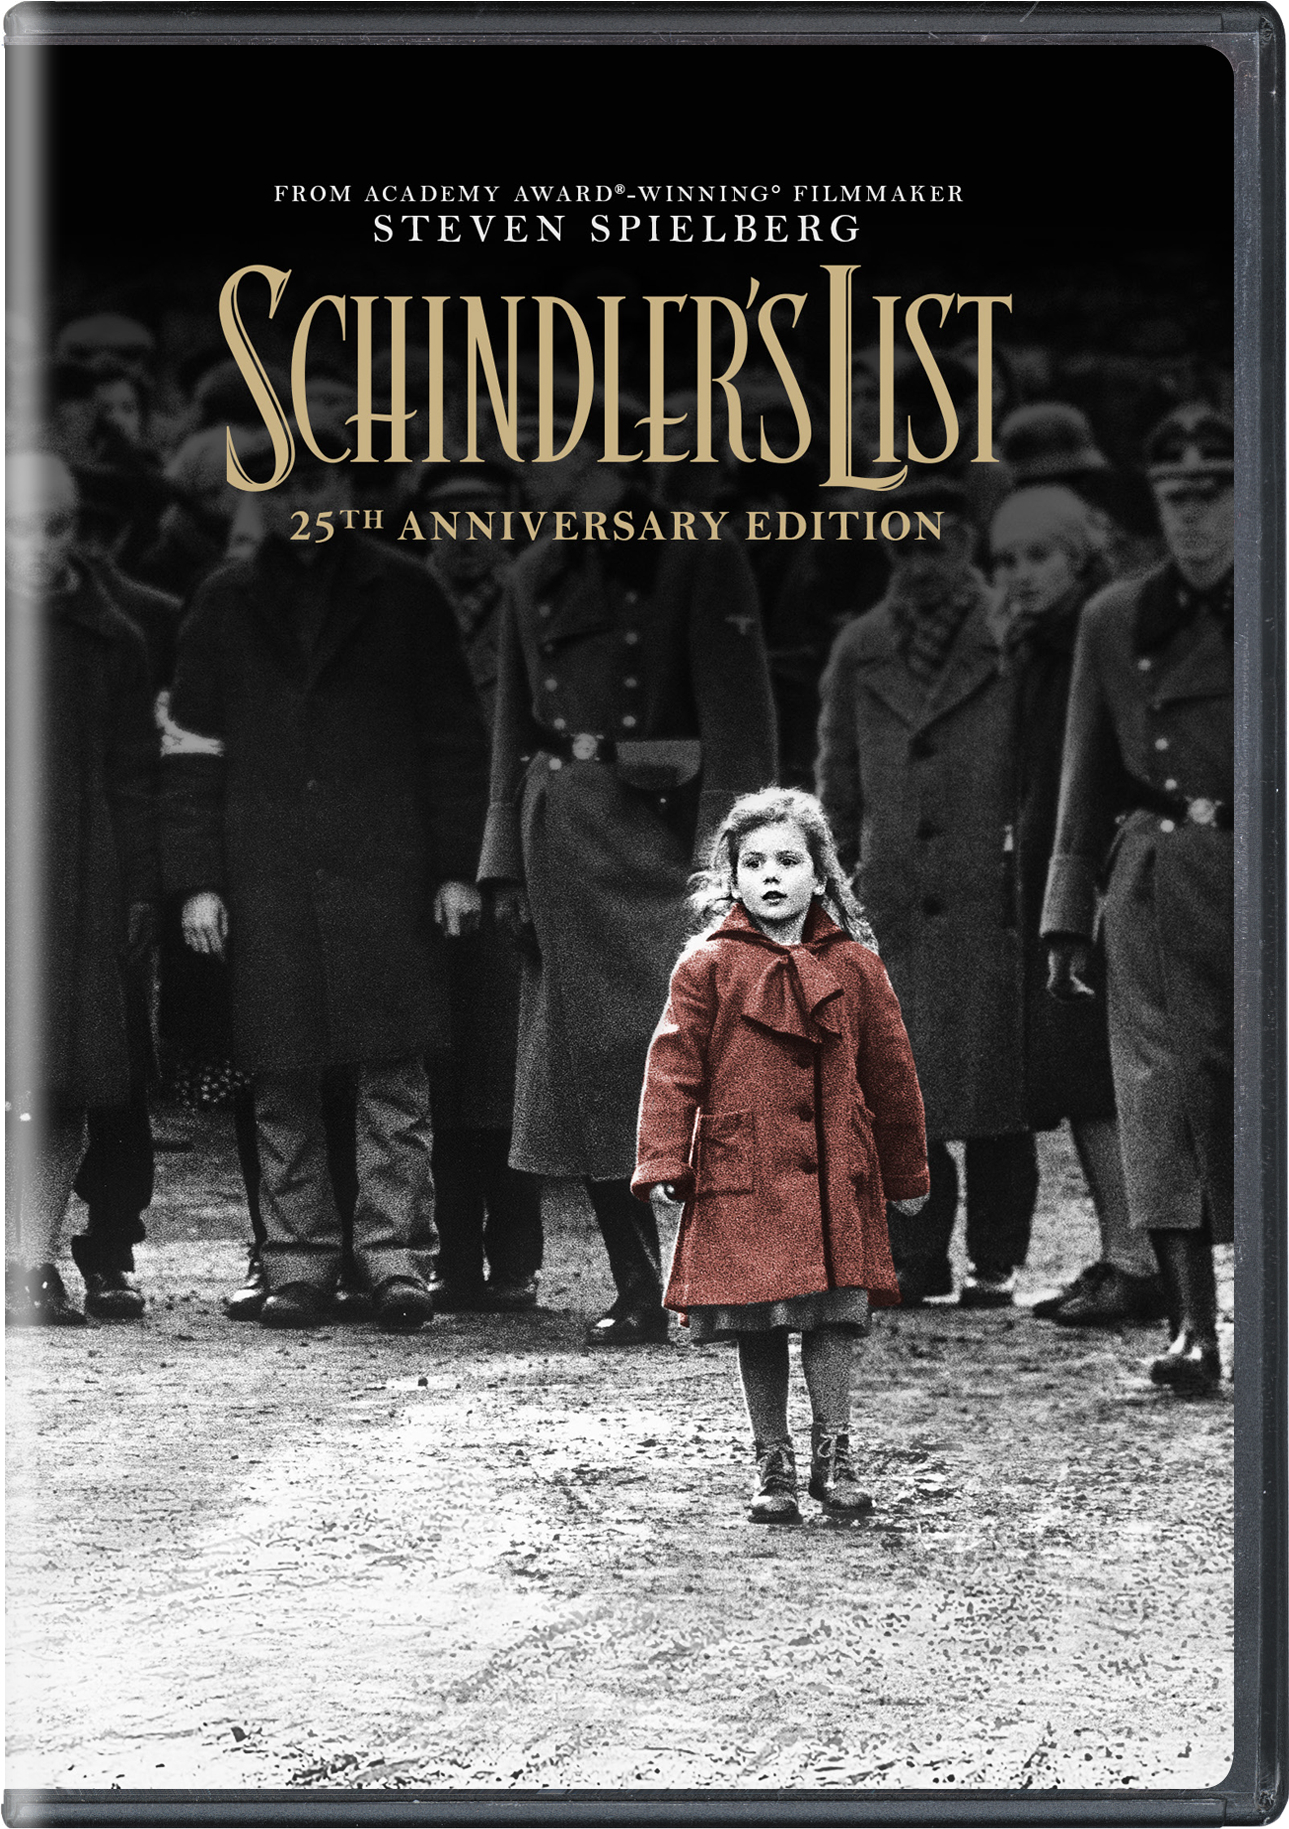 Schindler's List (25th Anniversary Edition) - DVD [ 1993 ] - Drama Movies on DVD